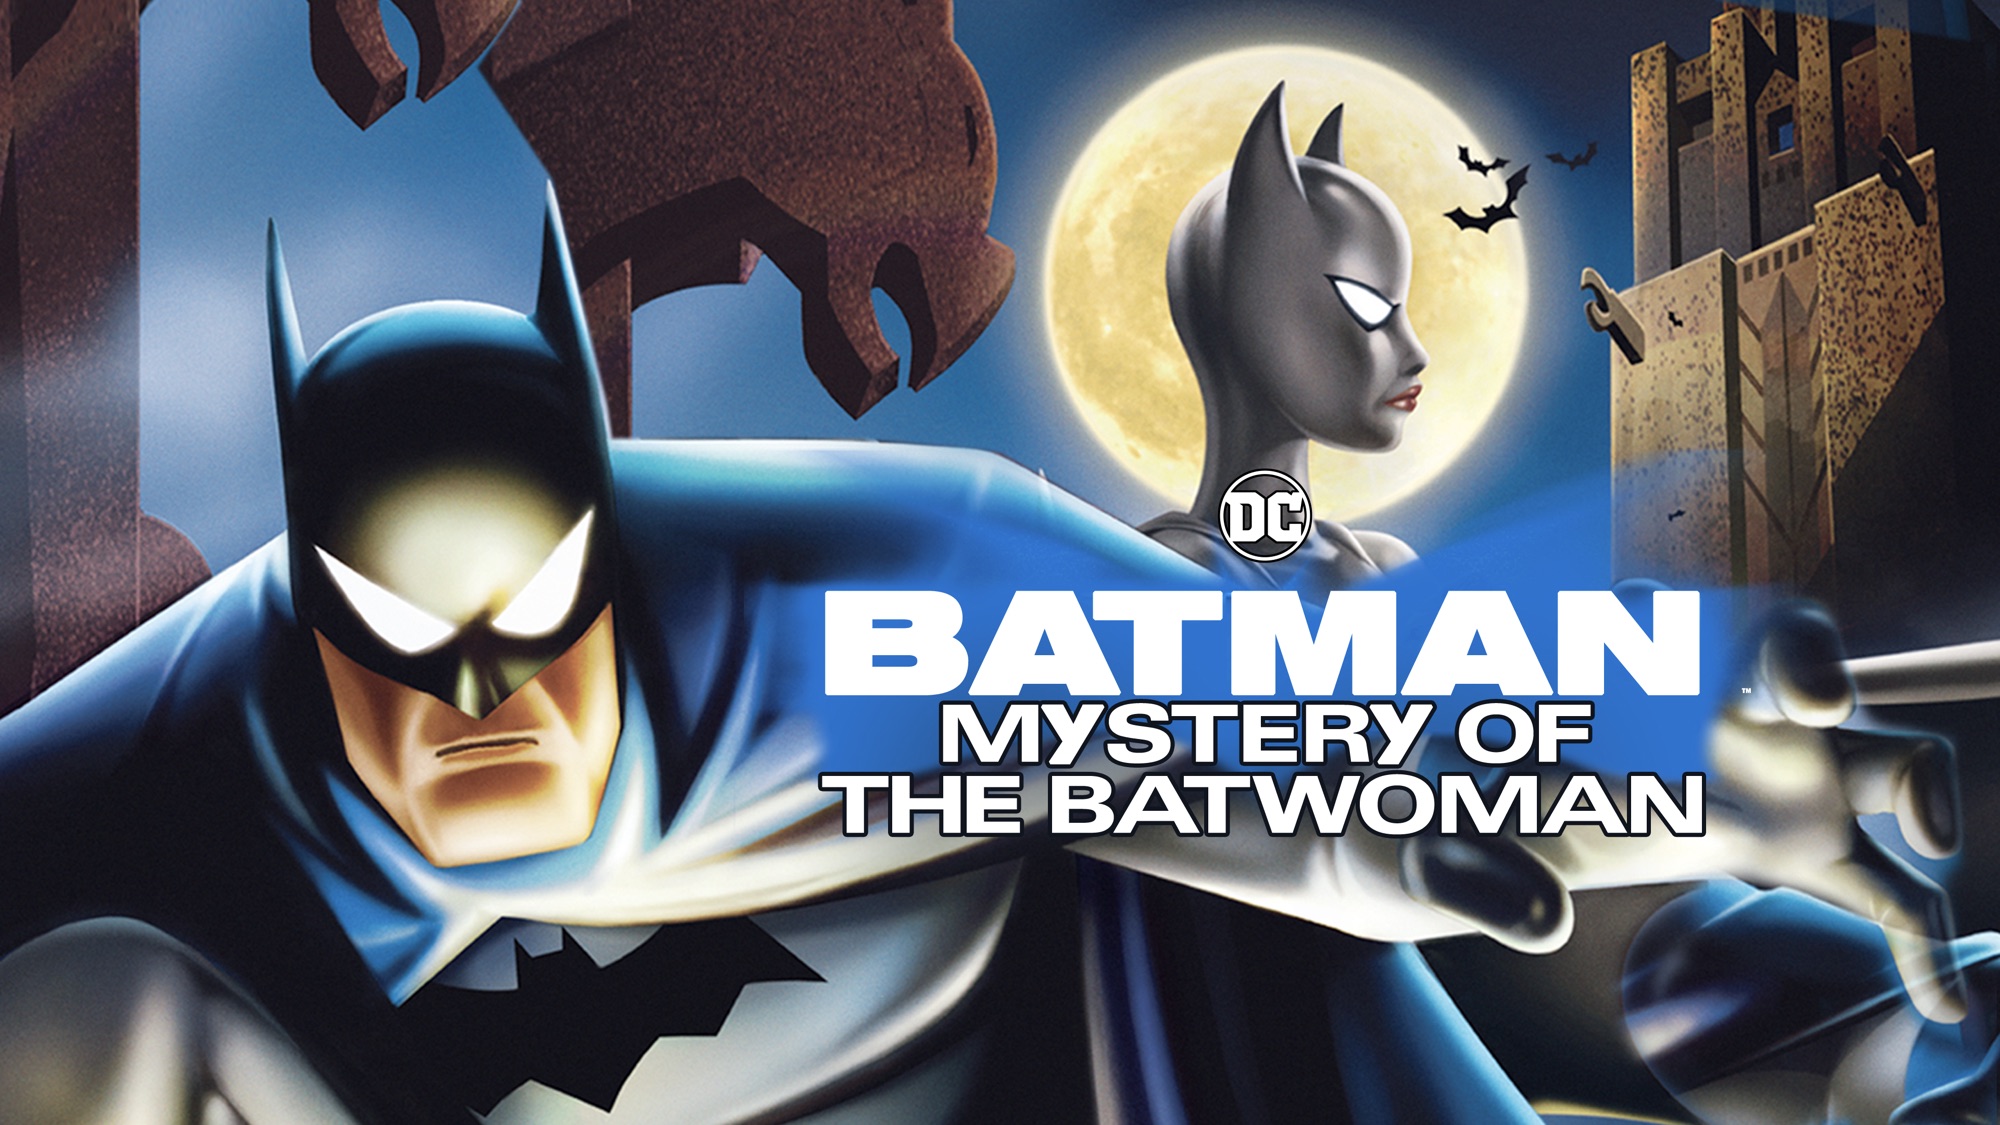 Batman mystery. Бэтмен и тайна женщины-летучей мыши (2003). Бэтмен тайна Бэтвумен. Бэтмен 2003 Бэтвумен.